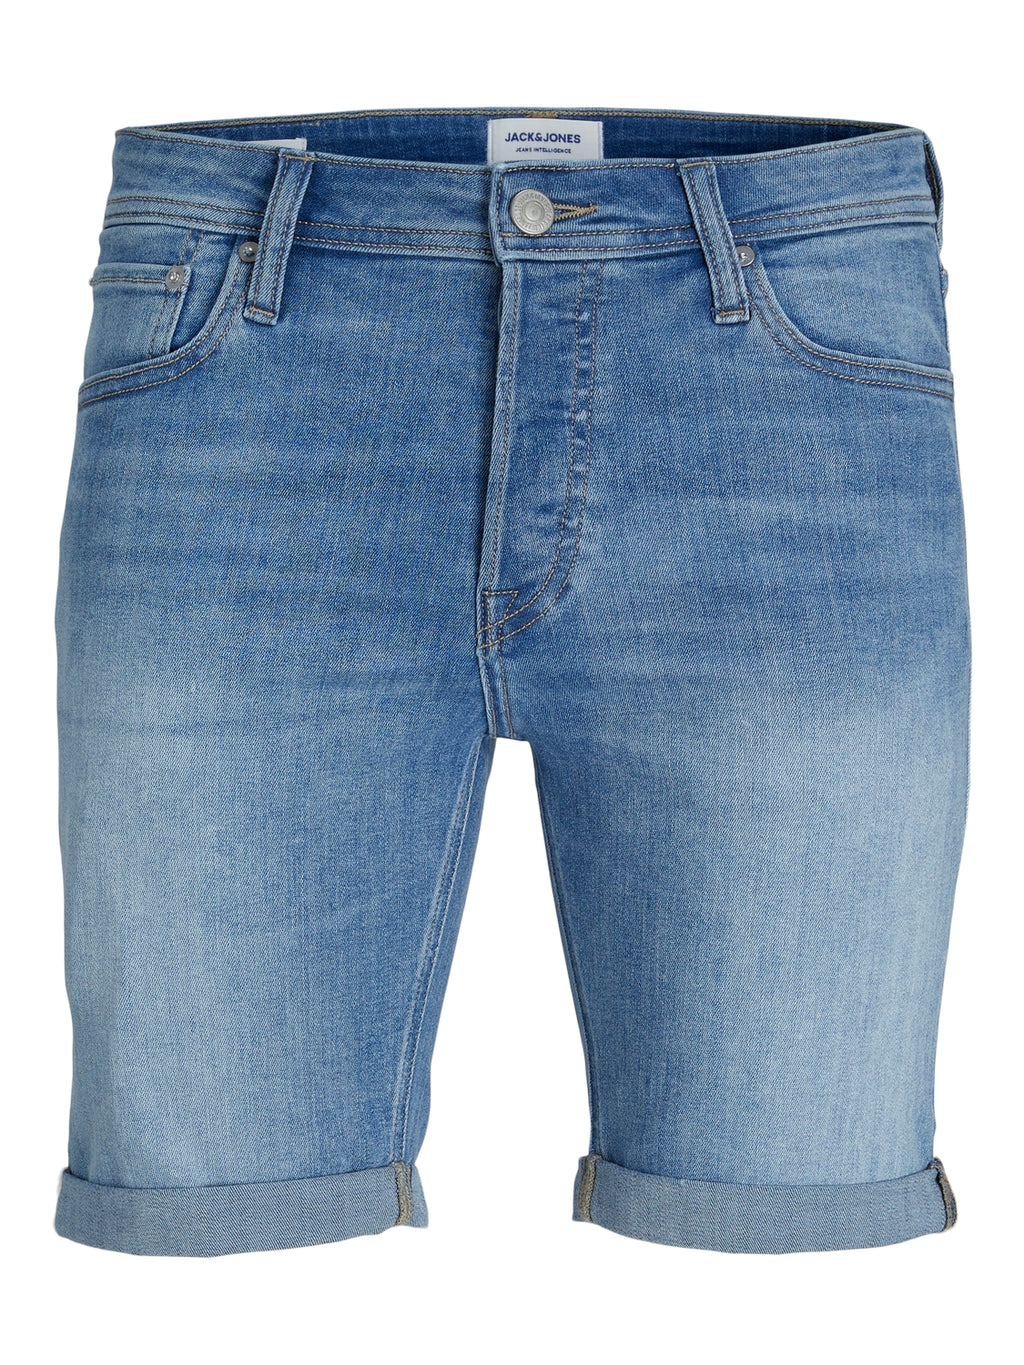 Jack & Jones Rick Denim Shorts AM 610 Blue - Raw Menswear